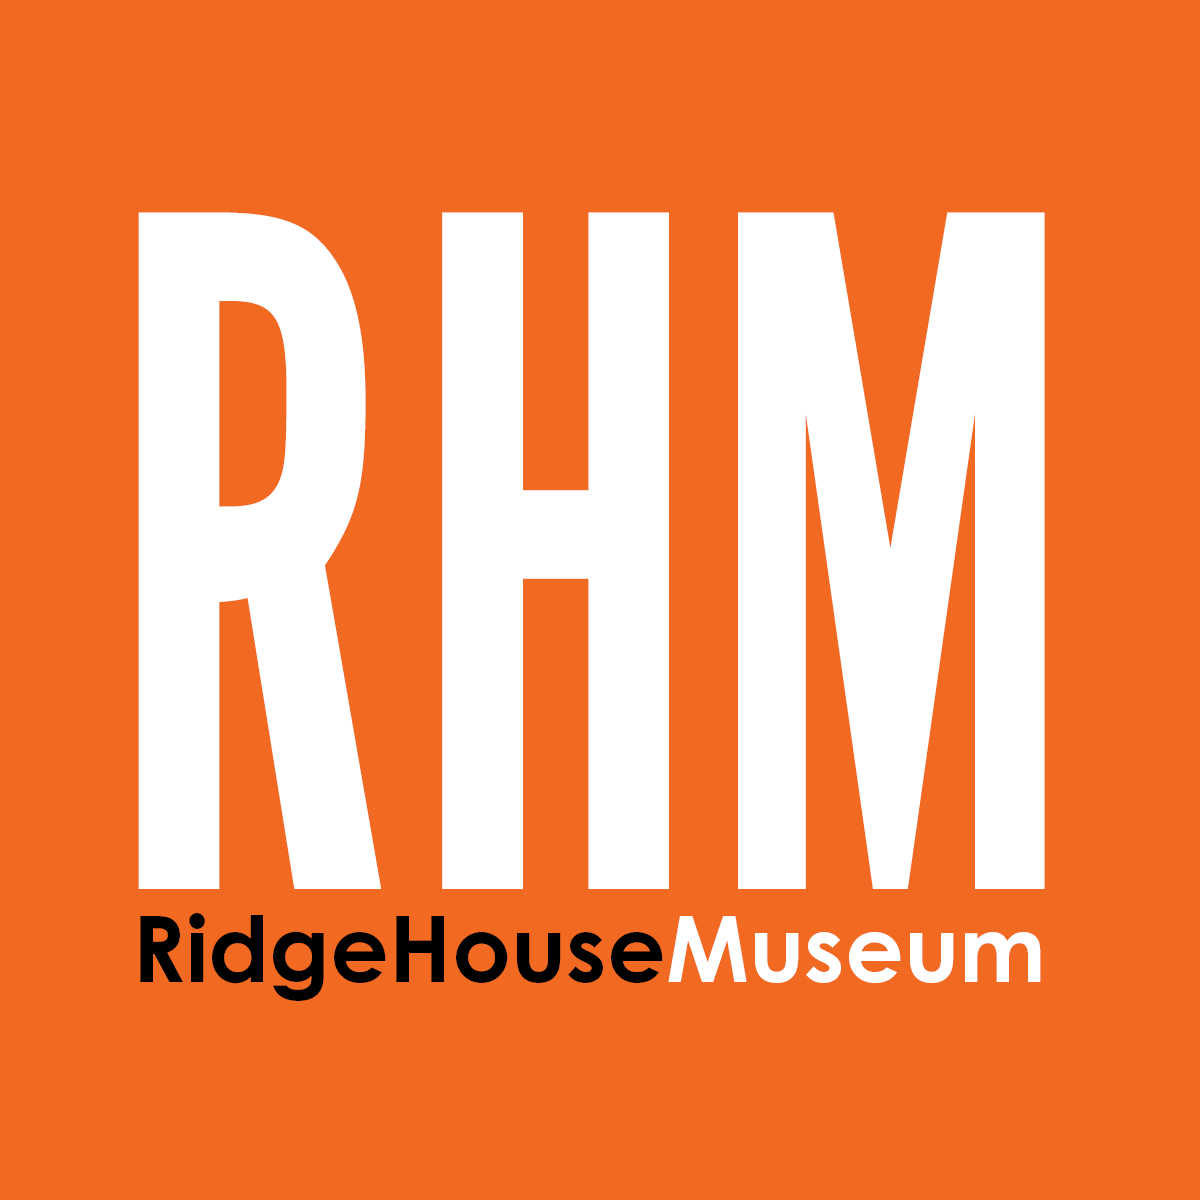 Ridge House Museum